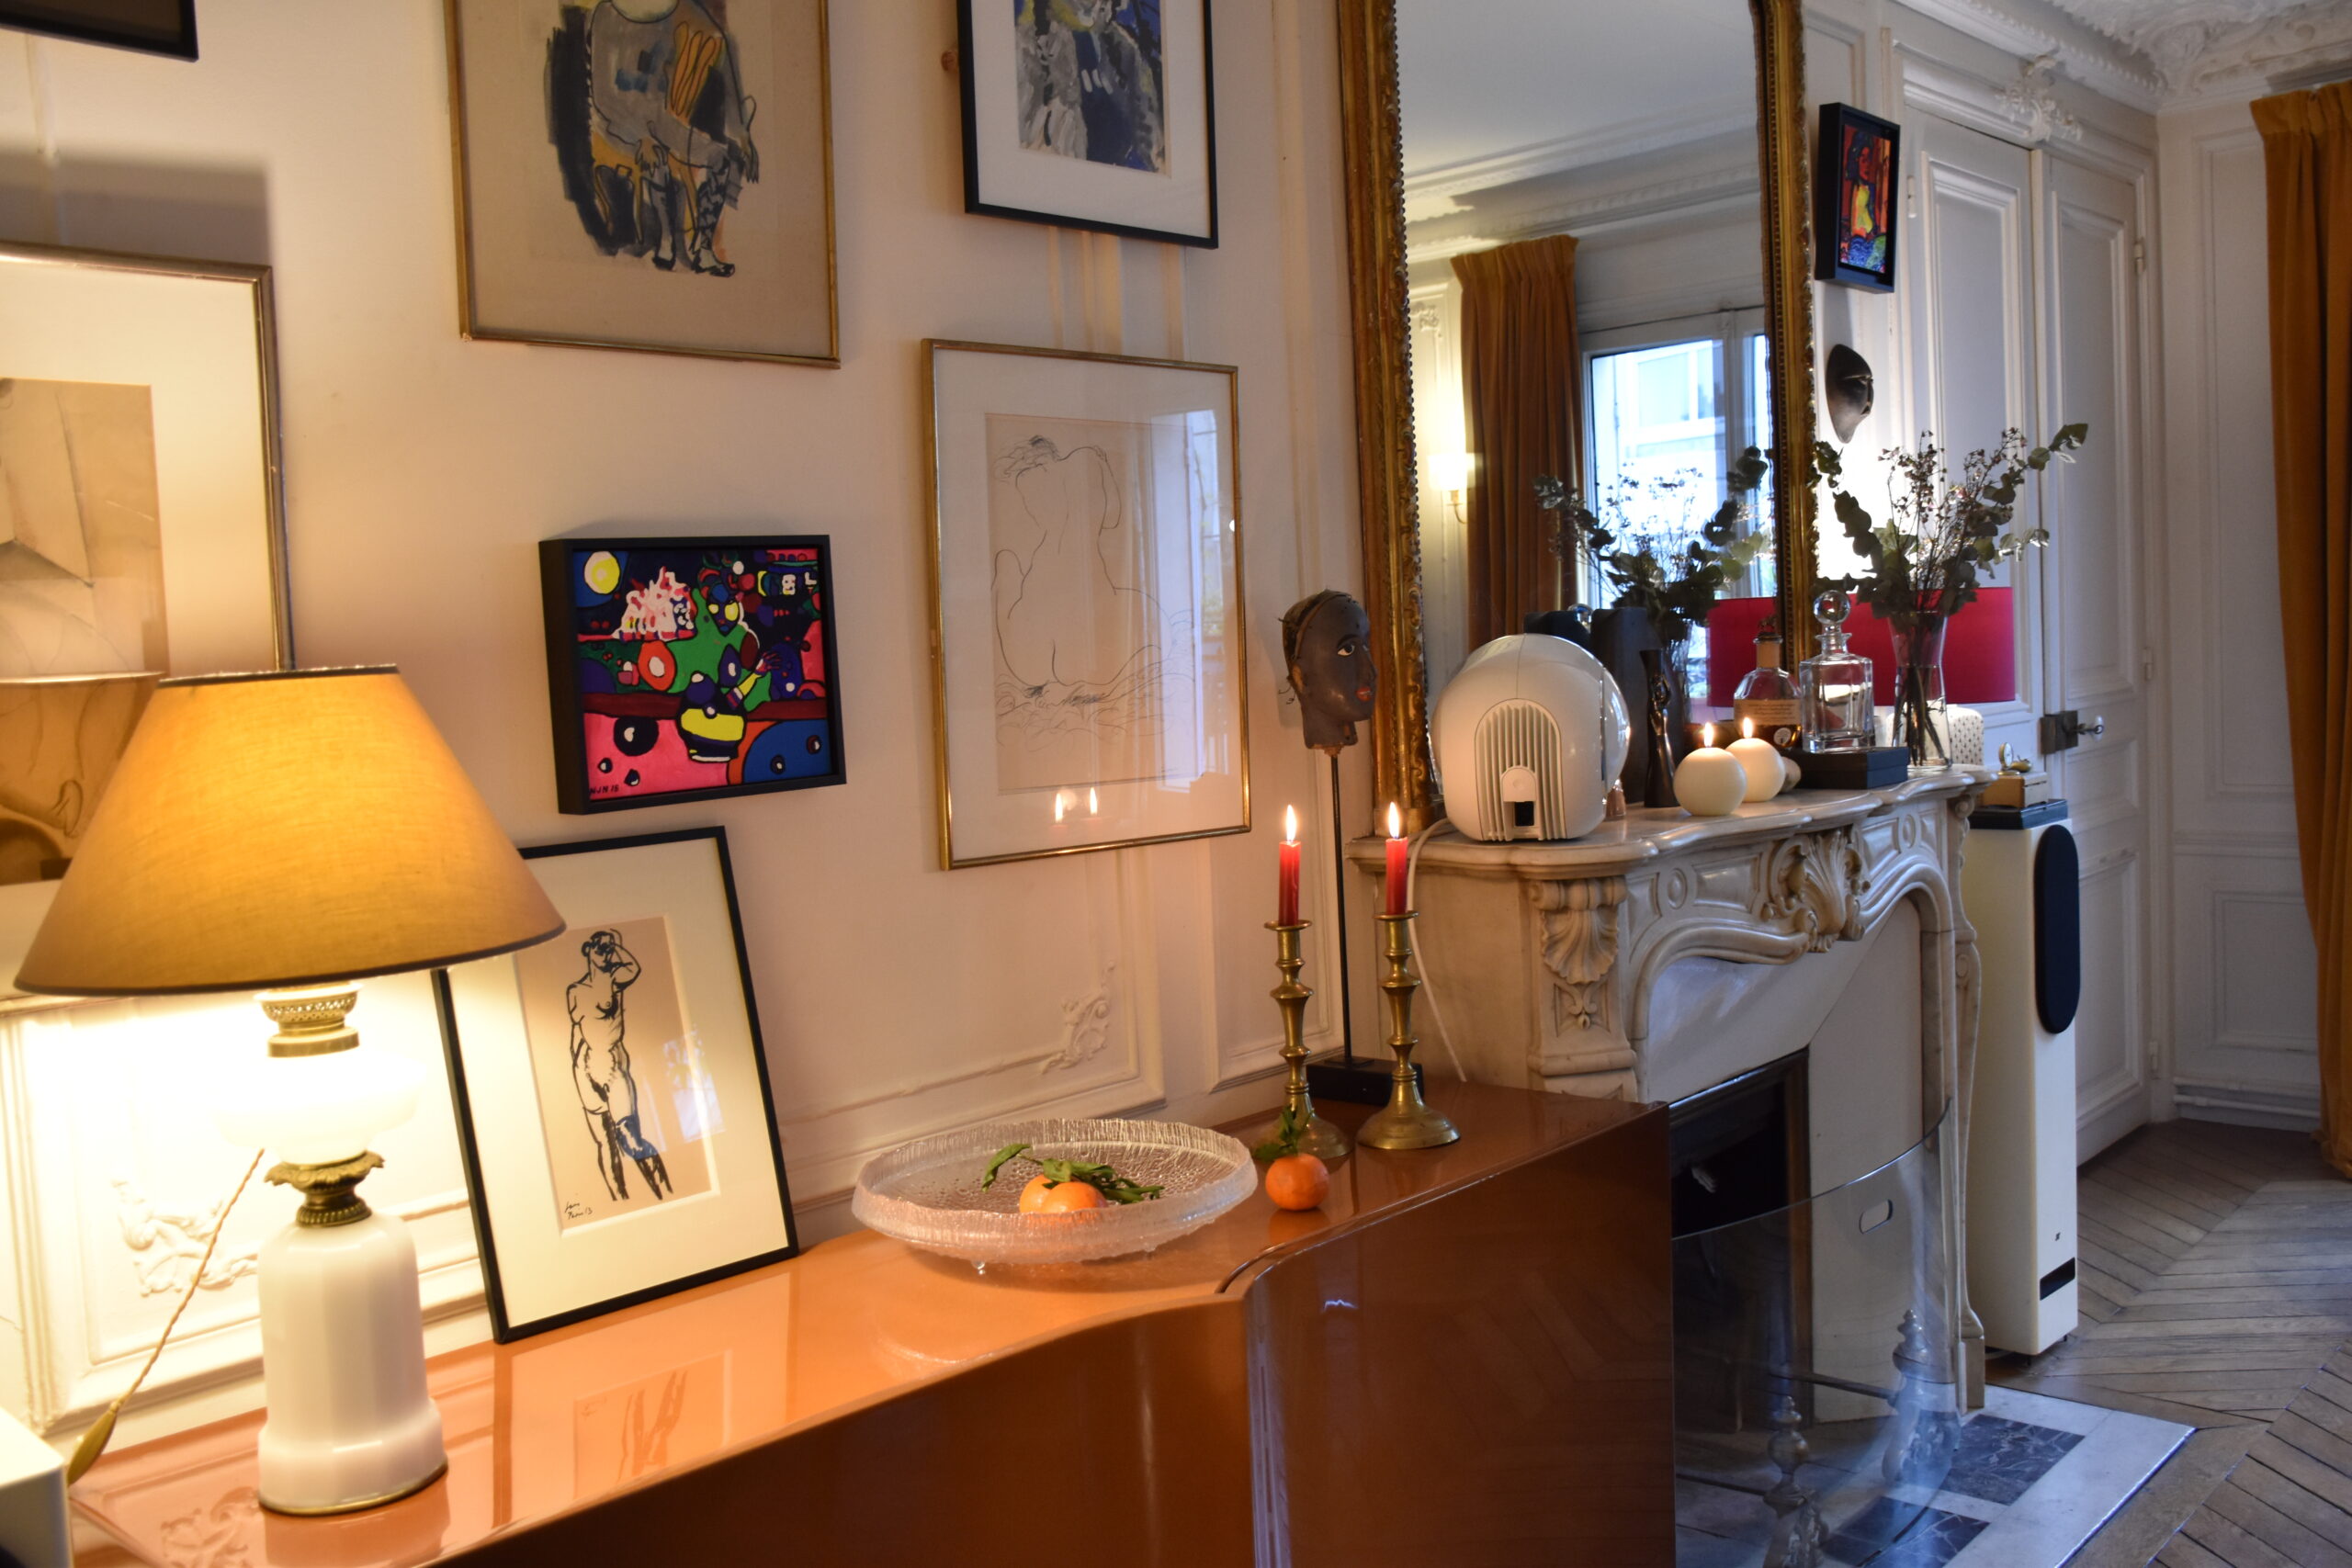 Rue de Paradis - details in living room